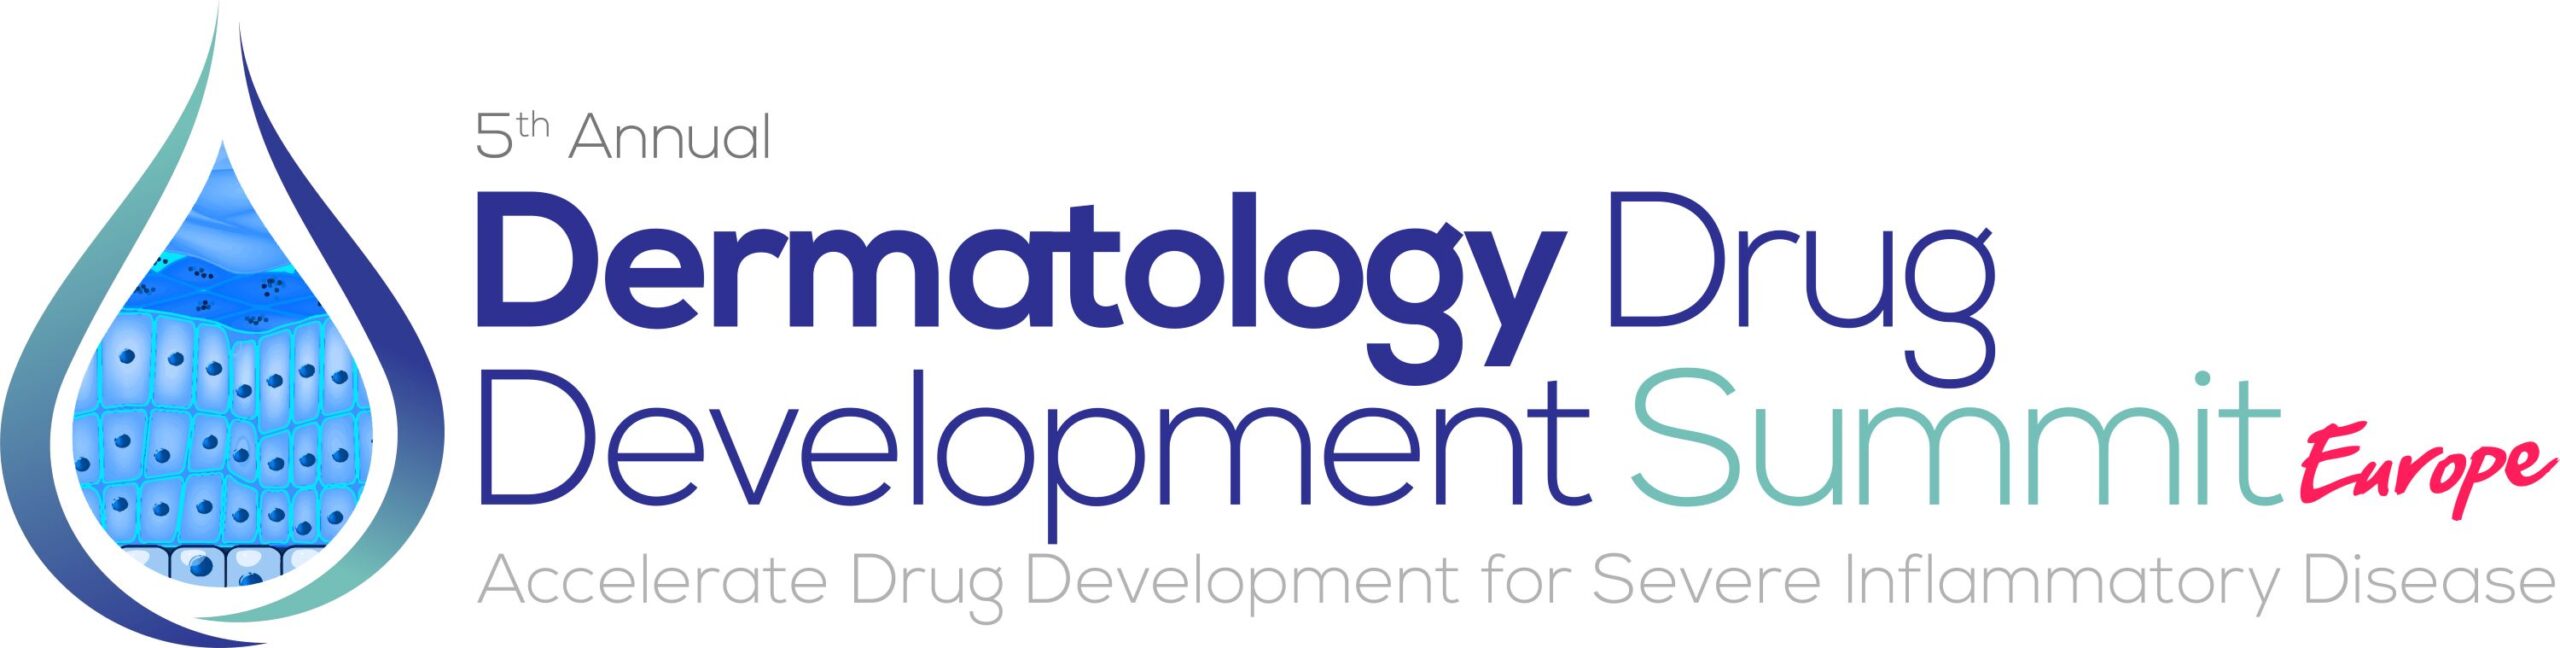 HW230918 5th Dermatology Drug Development Summit Europe logo (1)